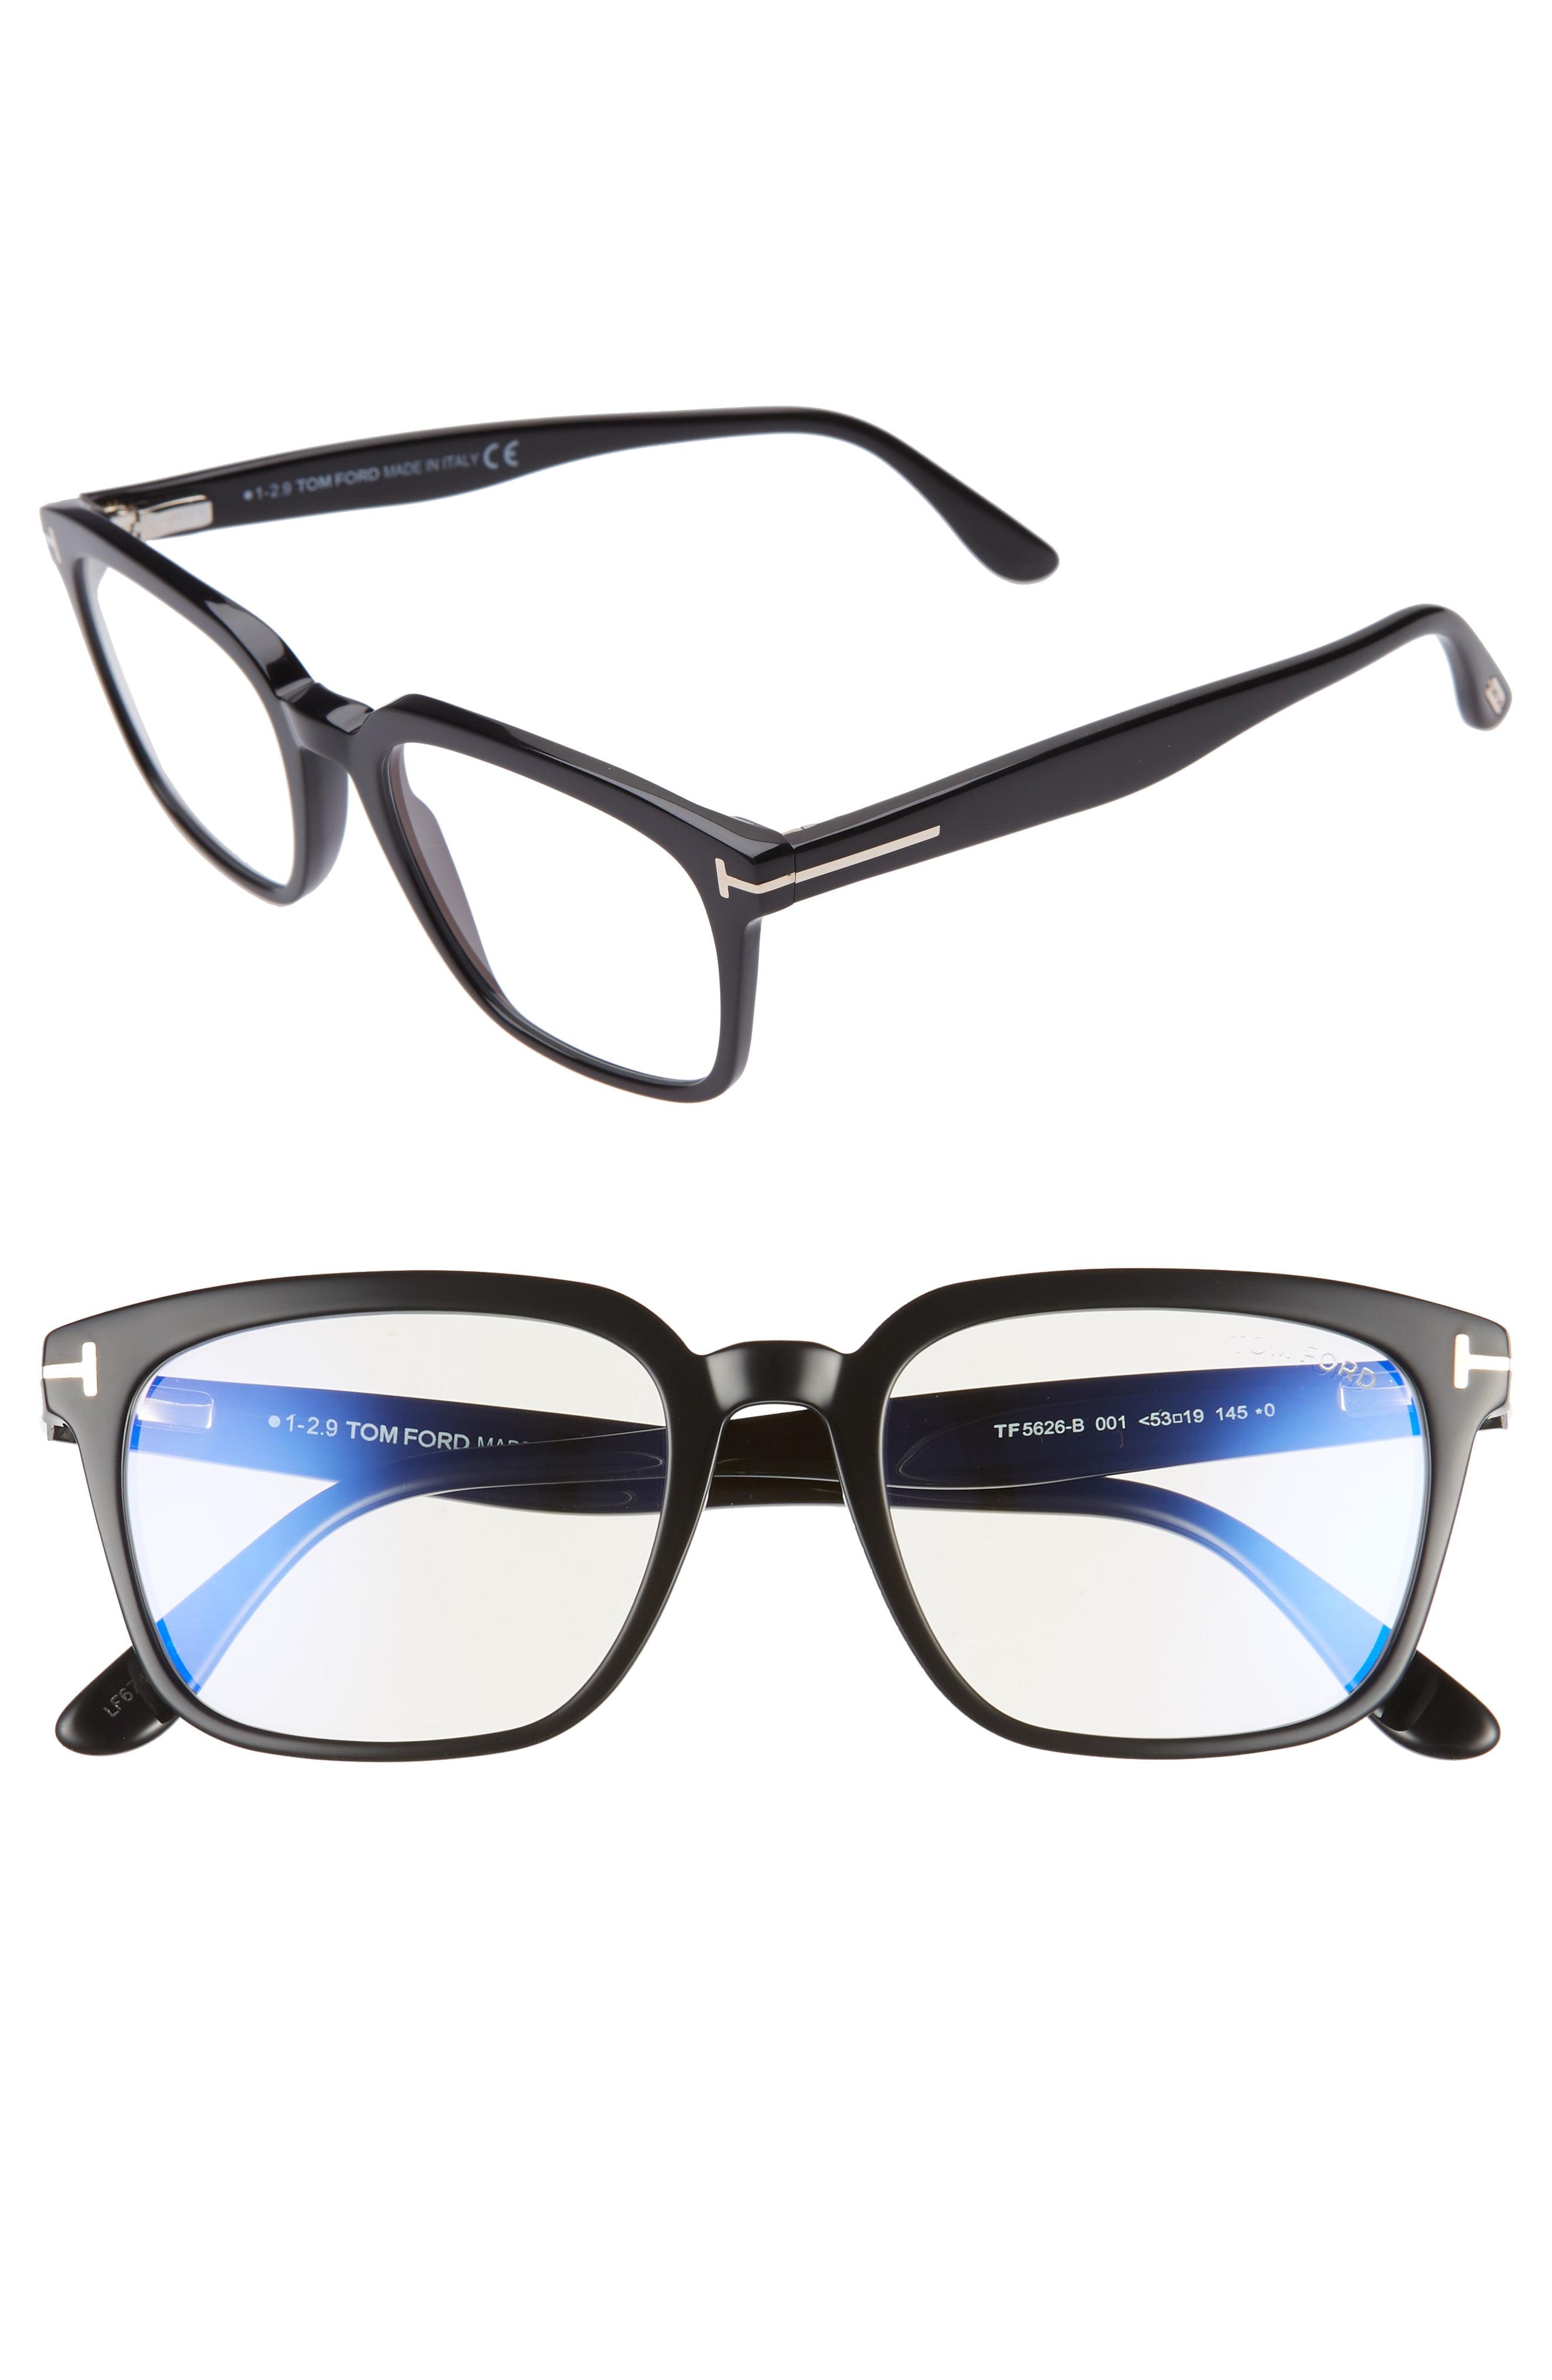 Tom Ford 55mm Blue Light Blocking Glasses - Shiny Black - Save 18% - Lyst